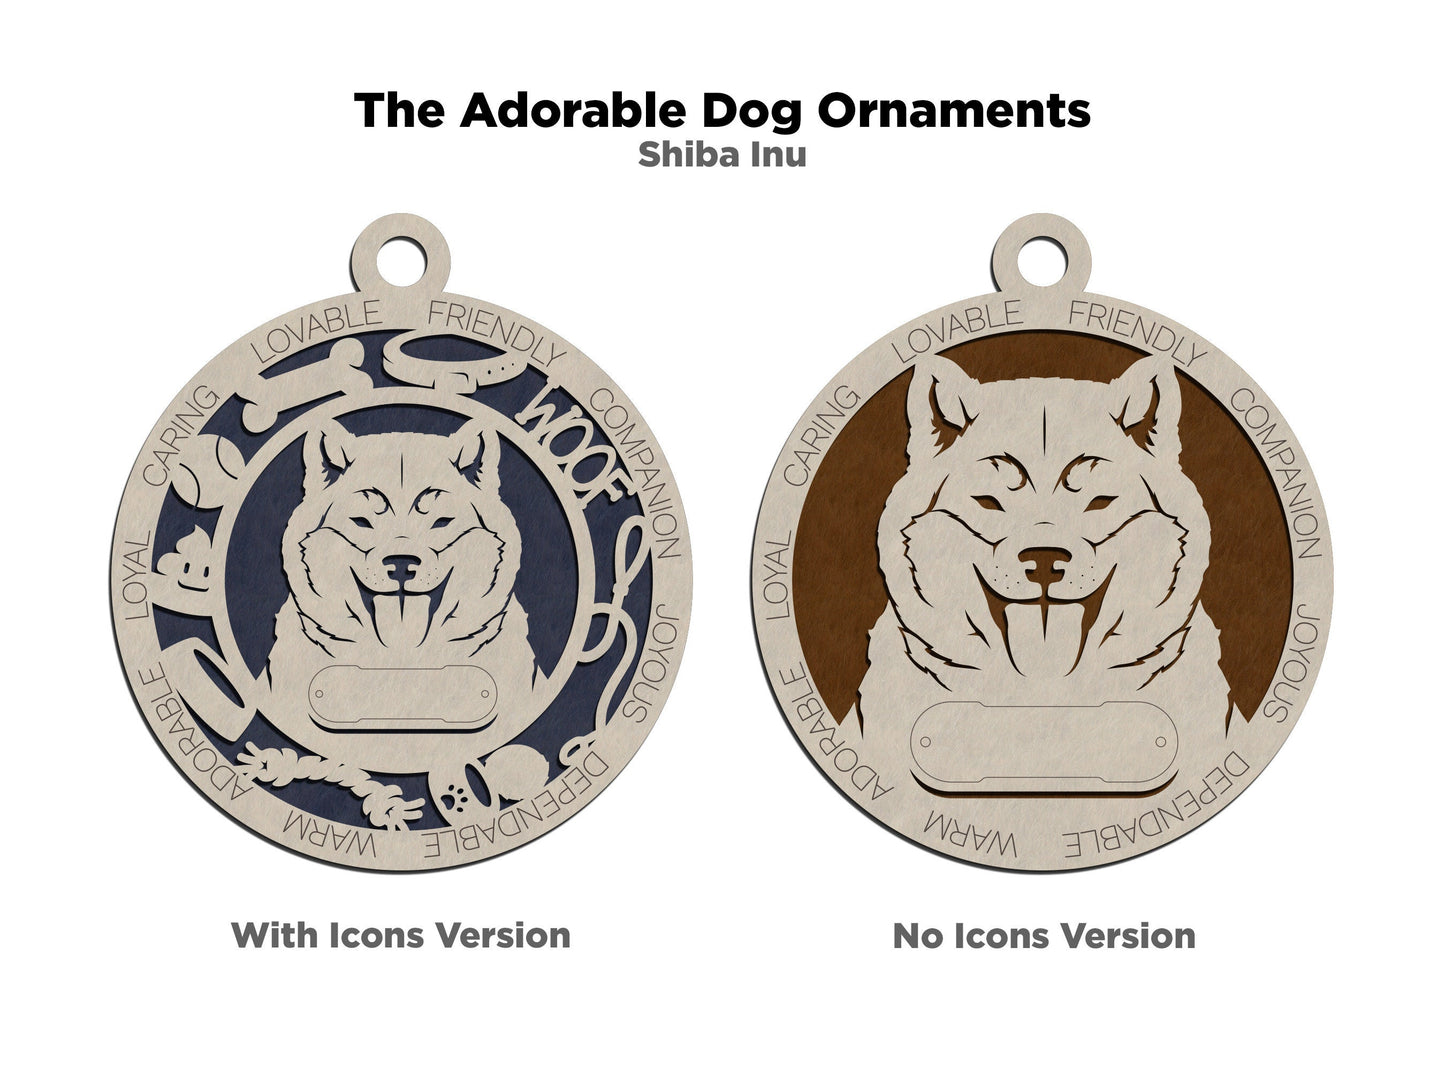 Shiba Inu - Adorable Dog Ornaments - 2 Ornaments included - SVG, PDF, AI File Download - Sized for Glowforge